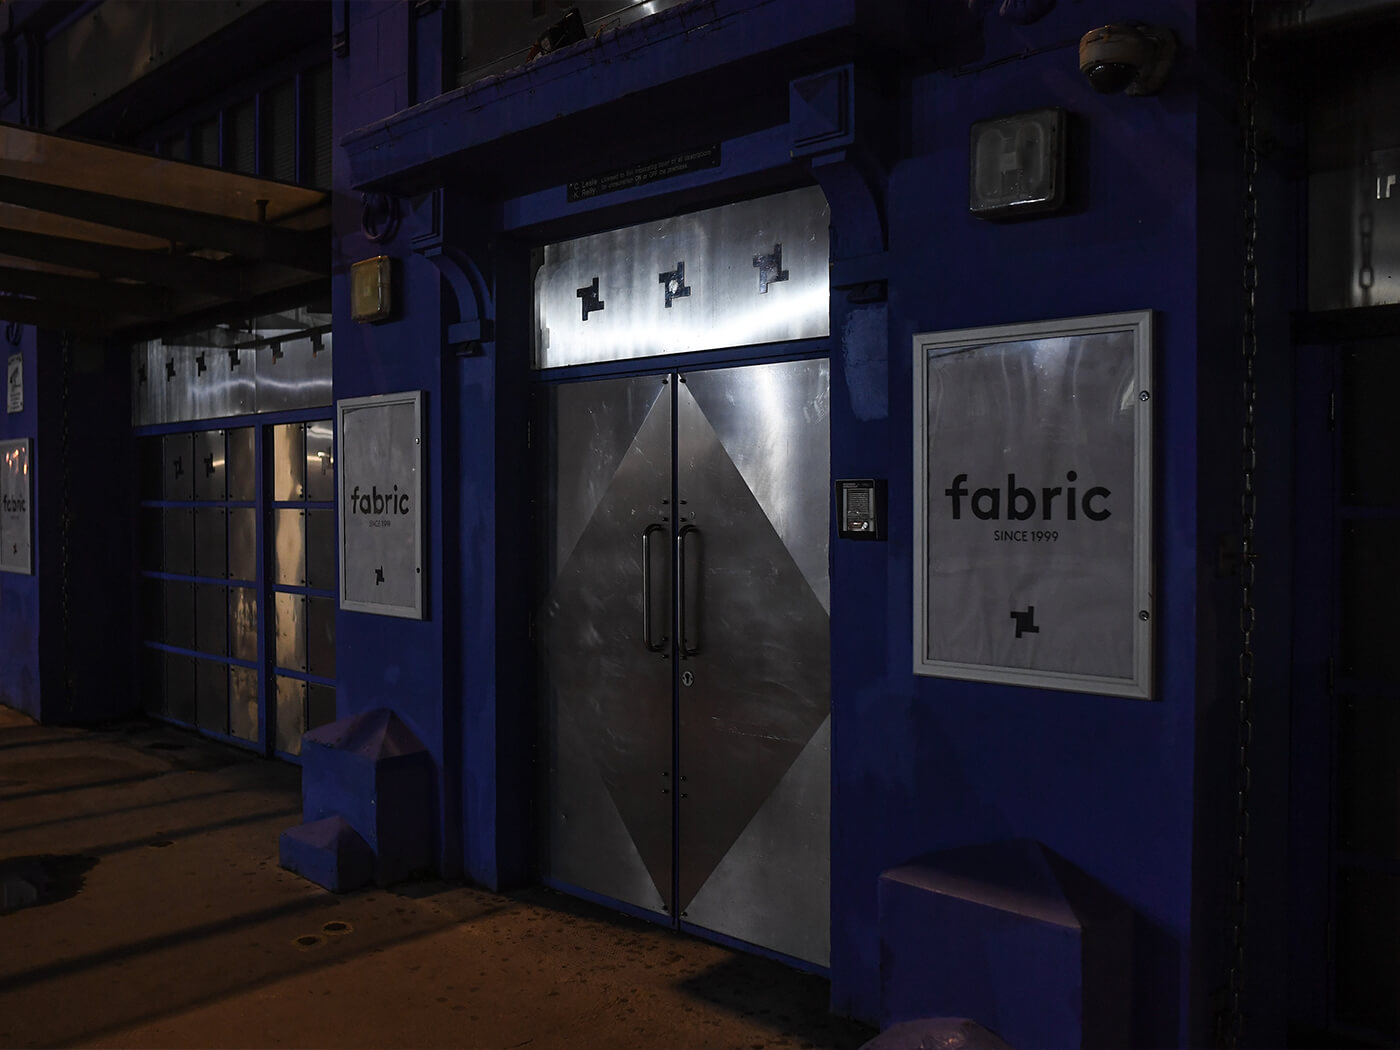 Fabric Nightclub